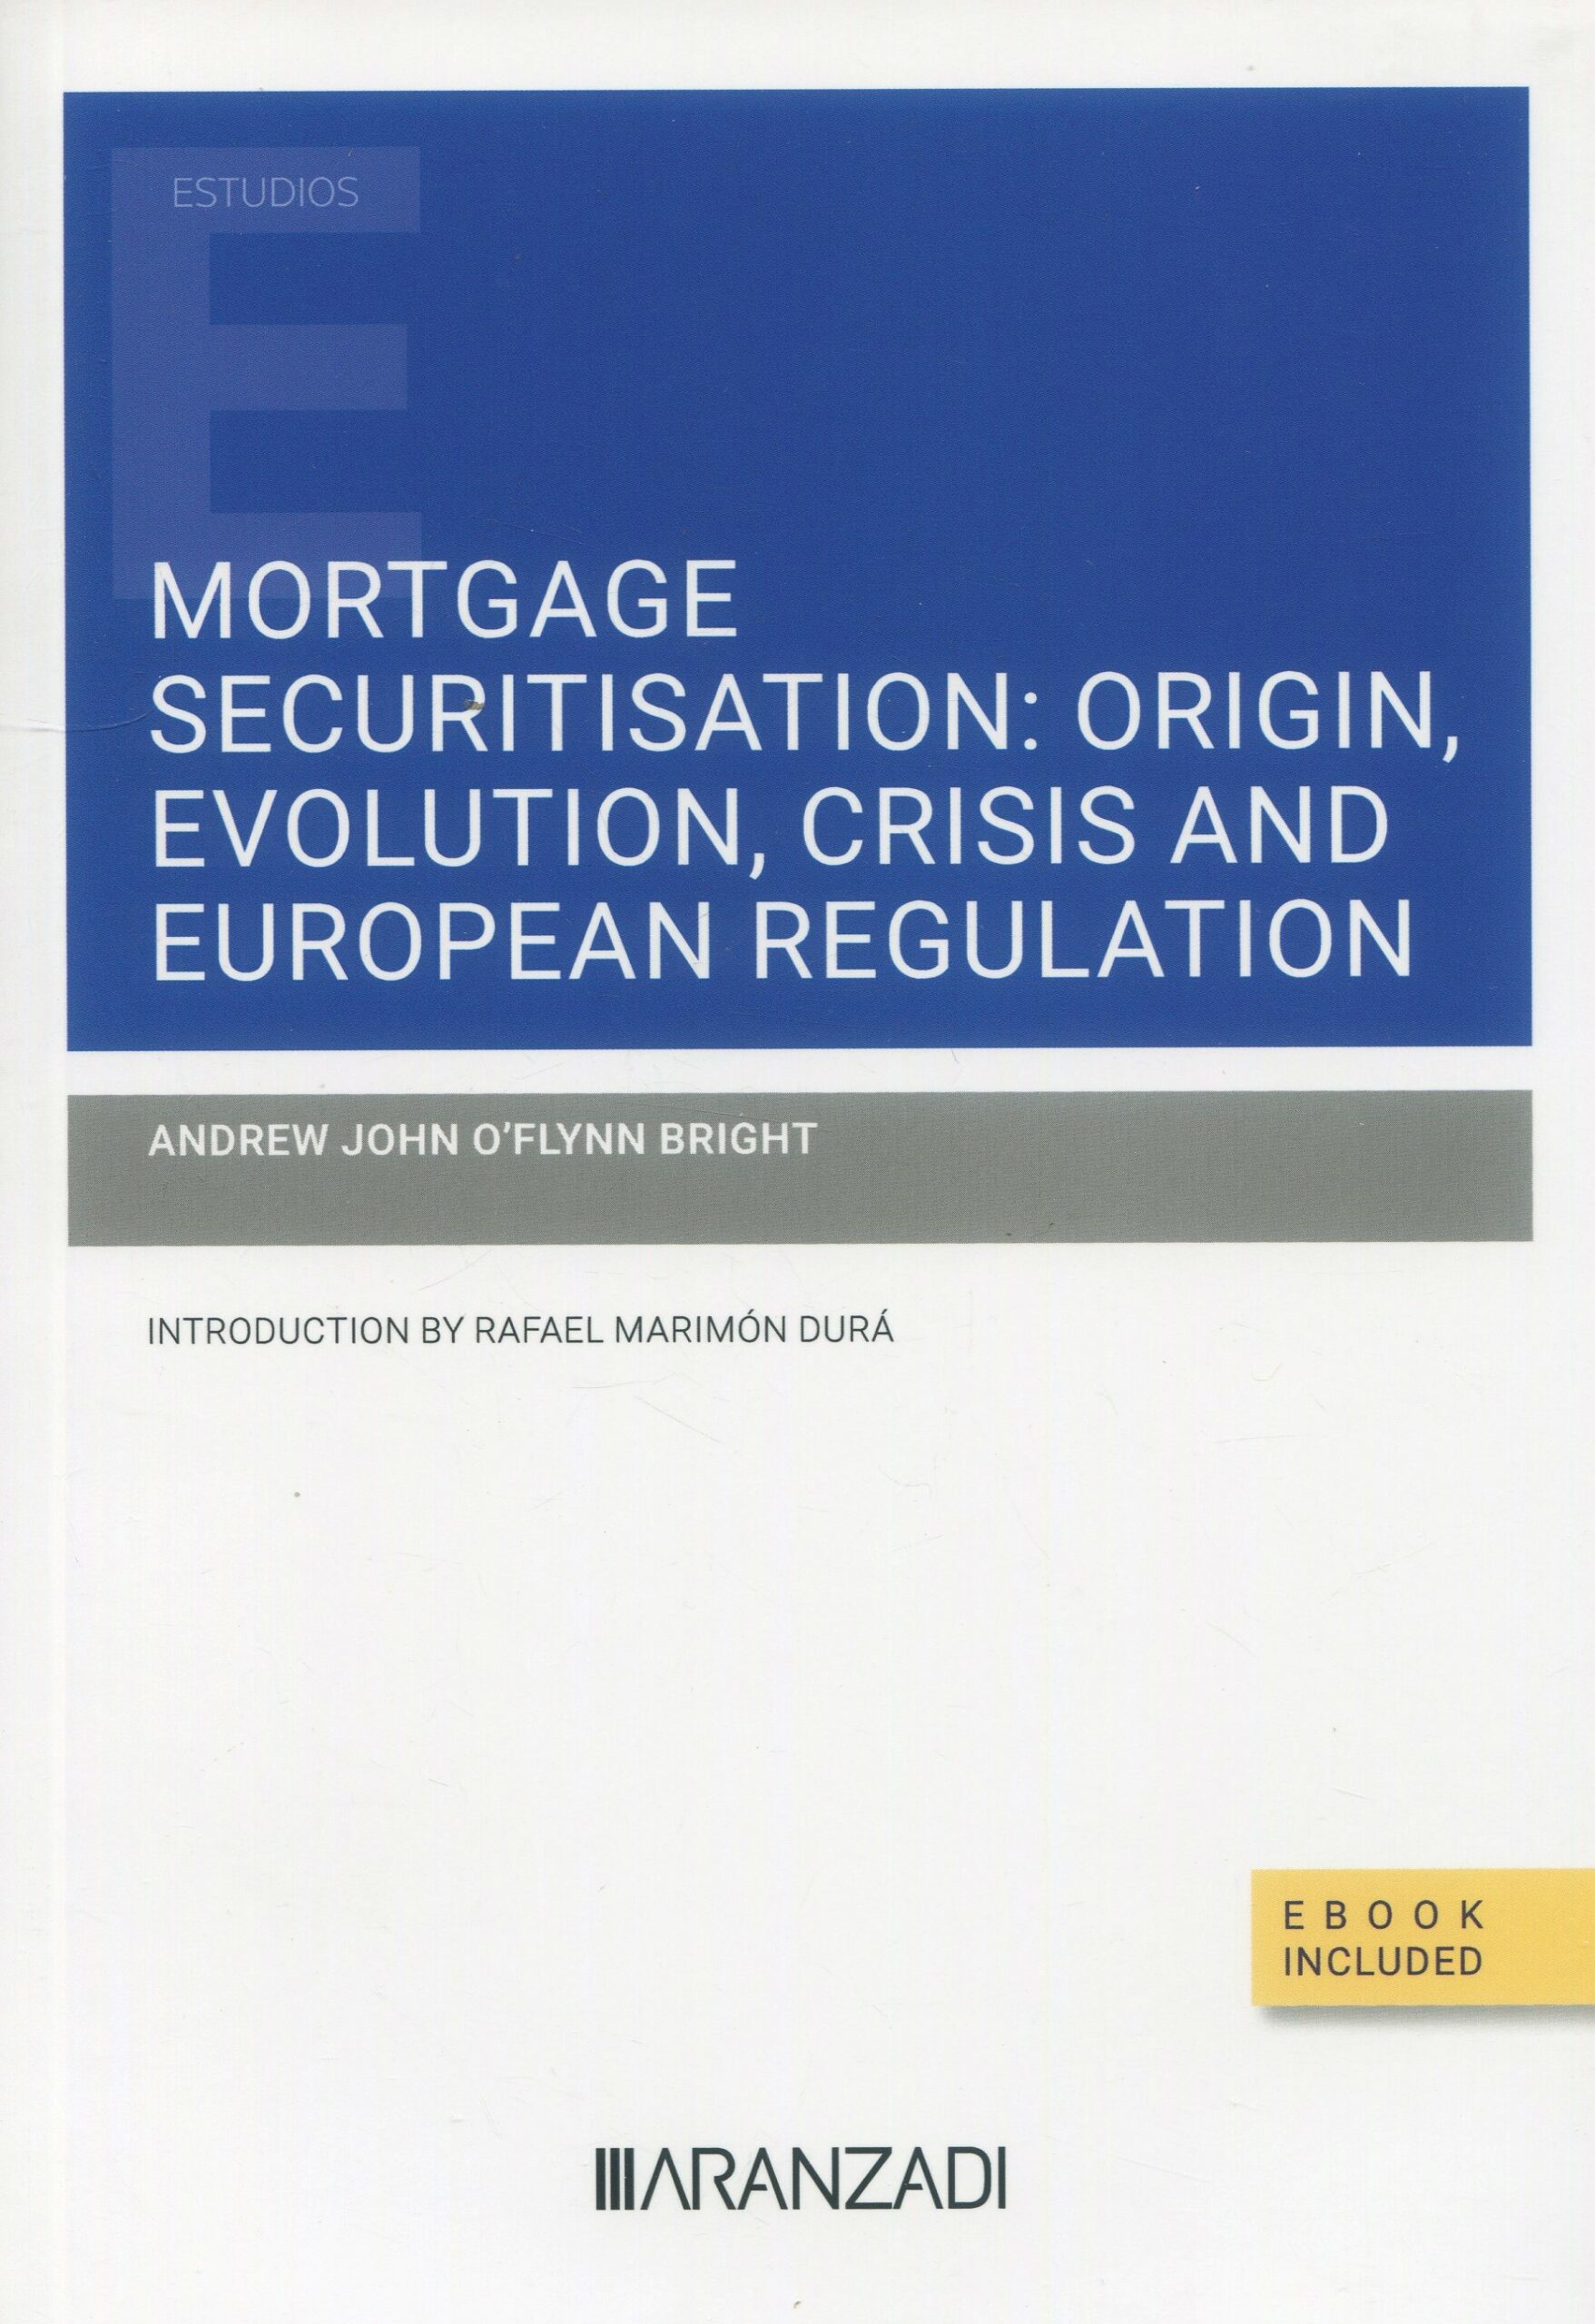 Mortgage securitisation